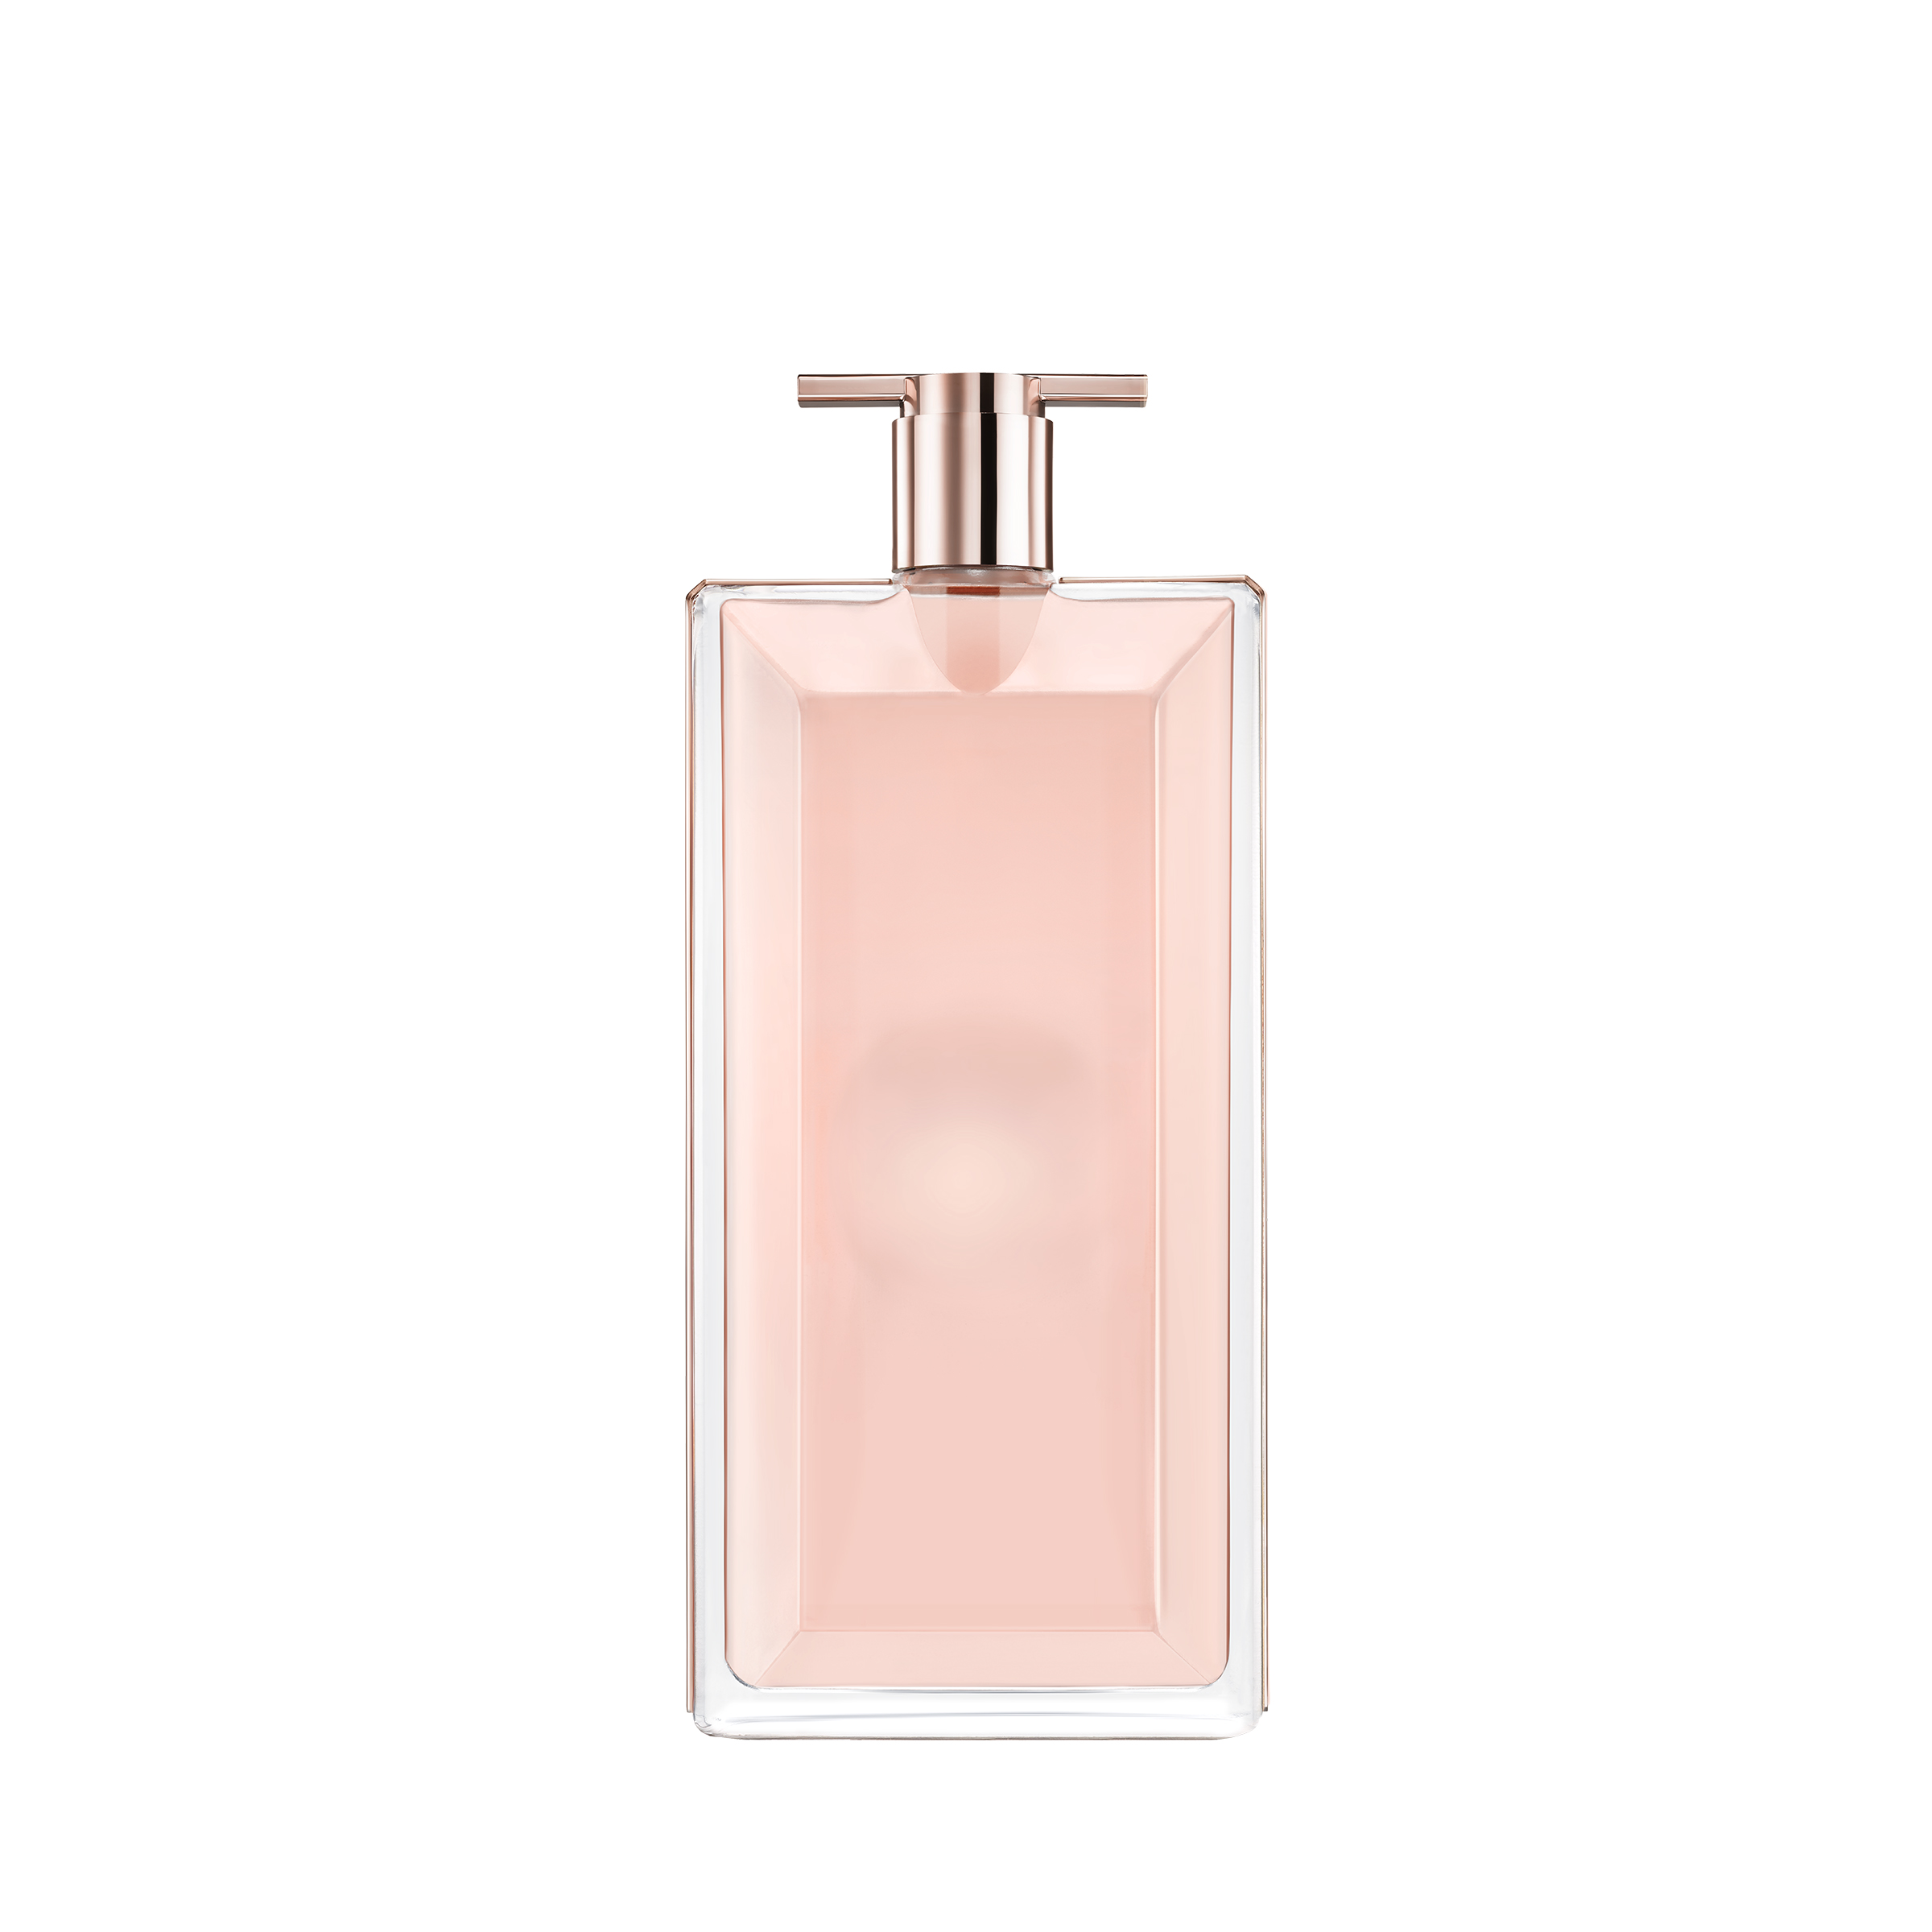 Idôle the new feminine fragrance by Lancôme Lancôme predstavlja Idôle, ženstveni miris za novu generaciju